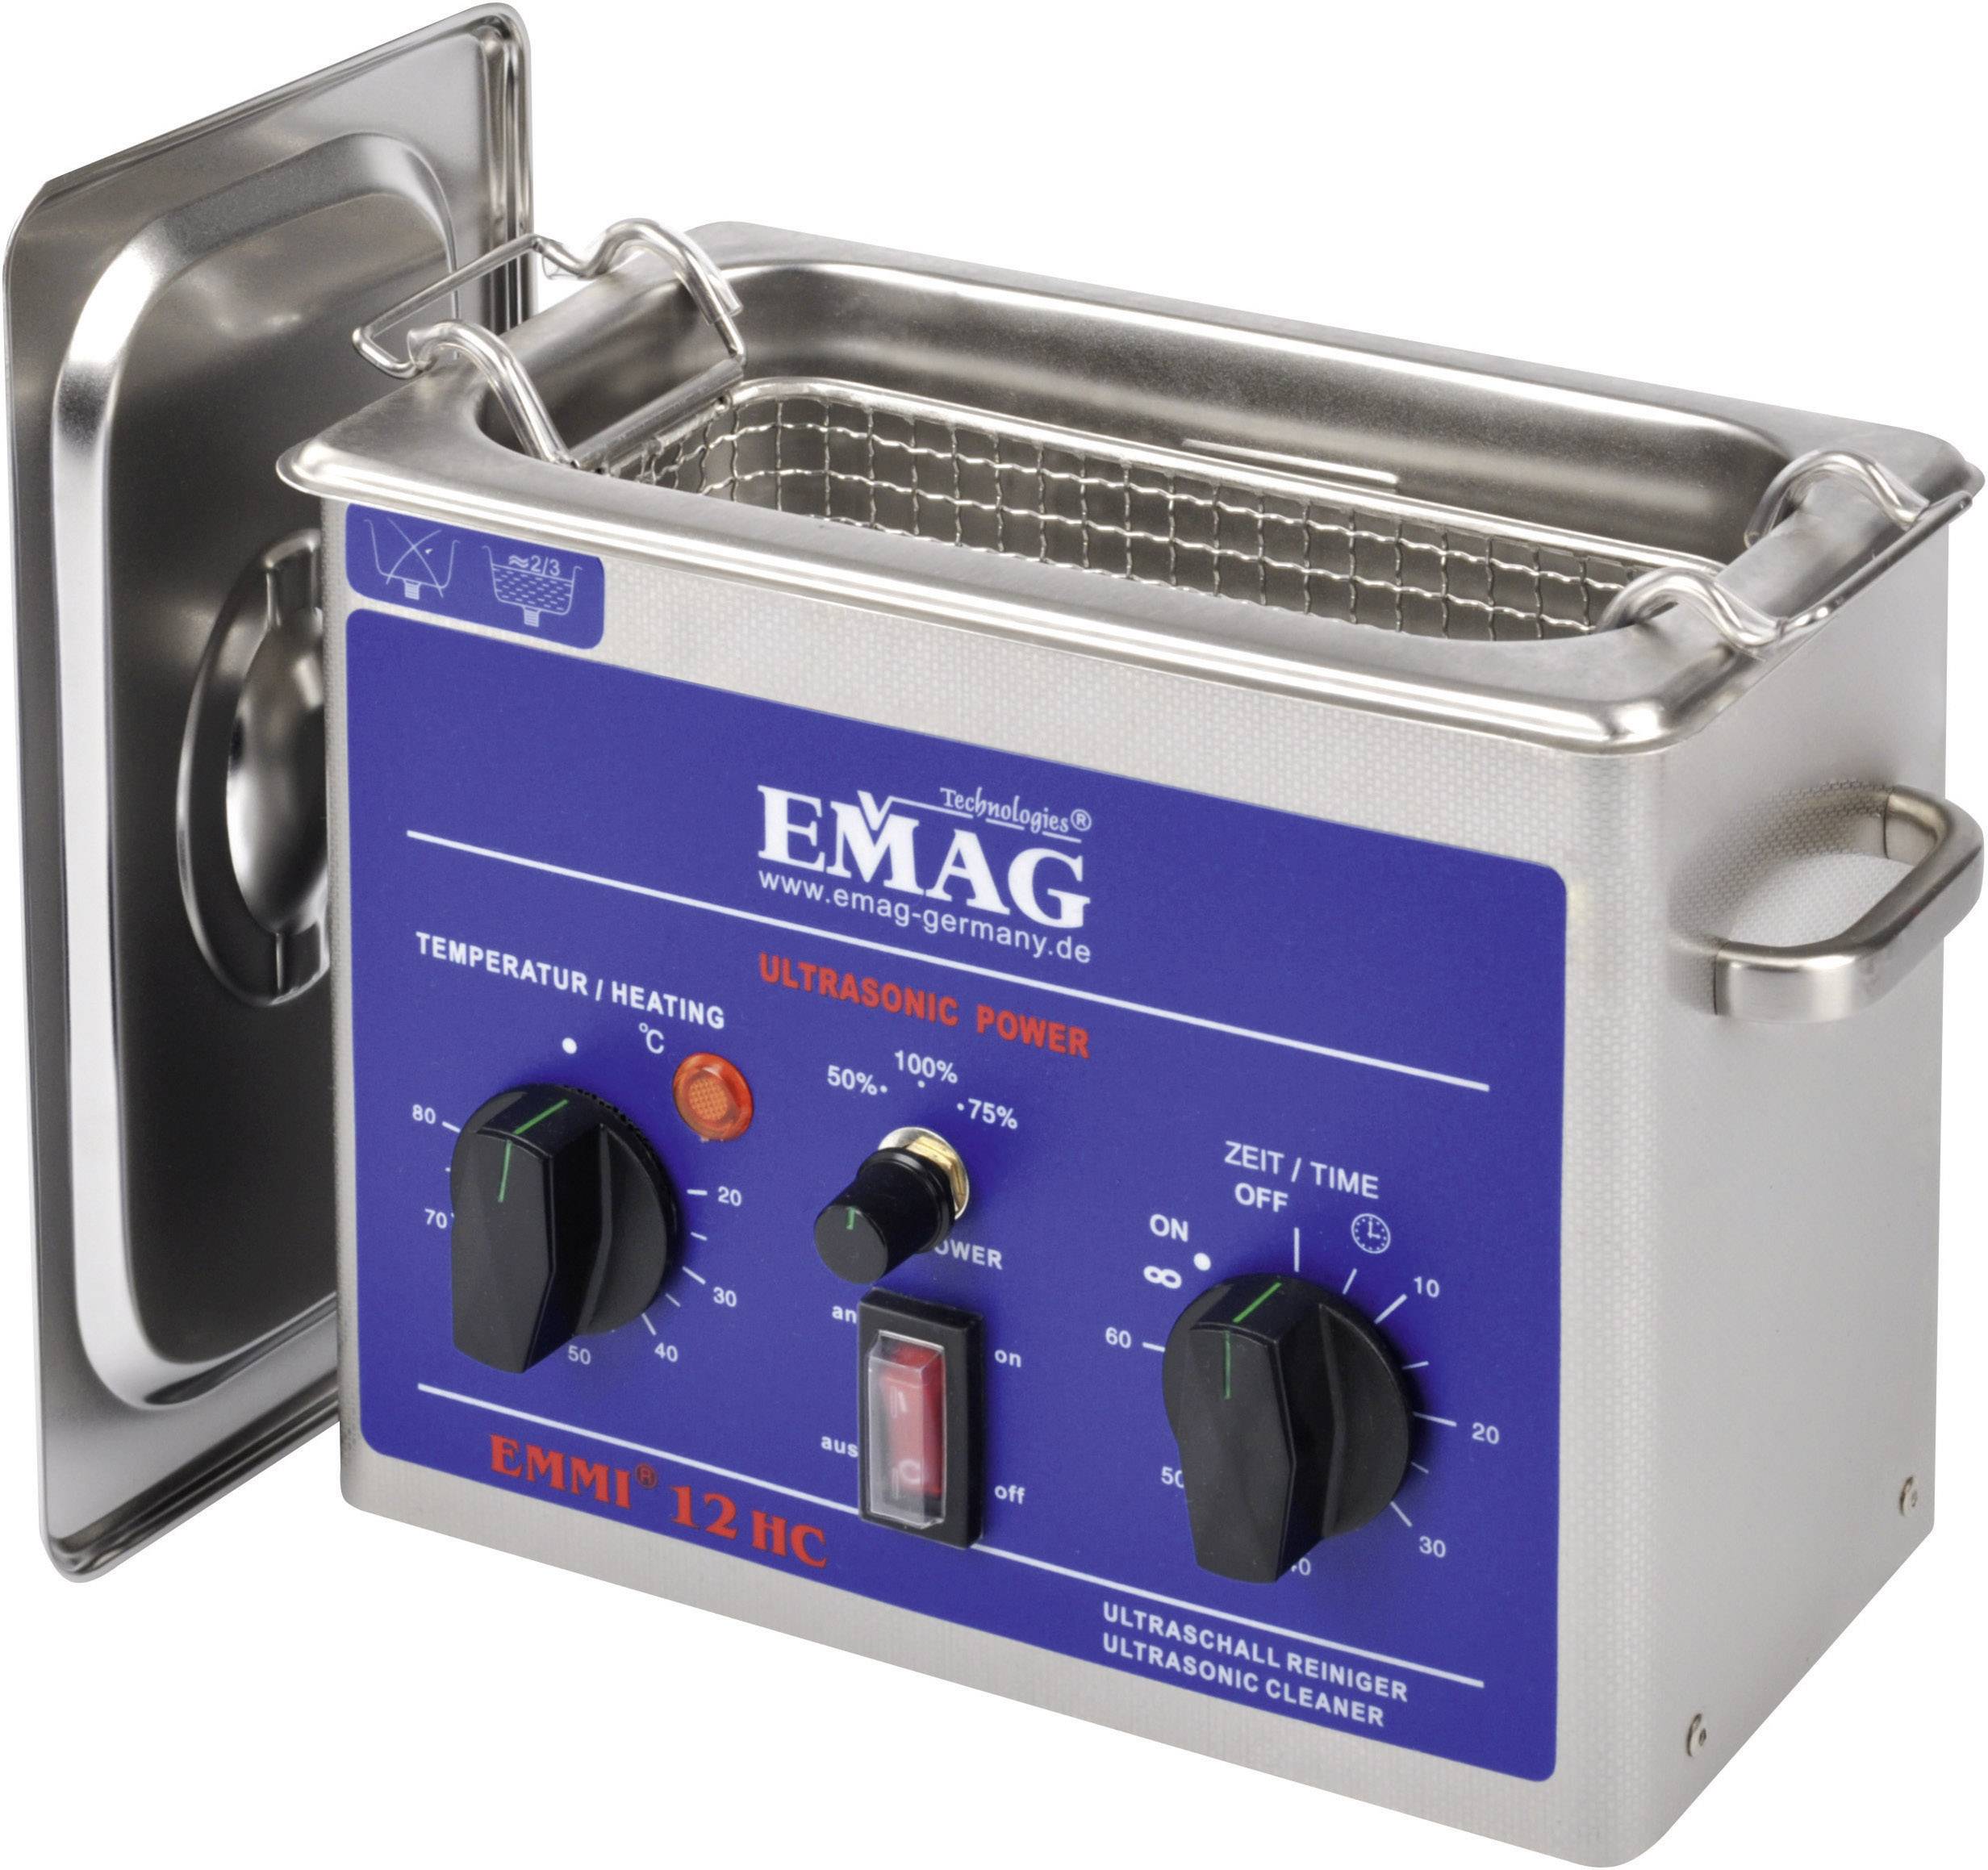 Nettoyeur à ultrasons digital avec évacuation - 10 litres